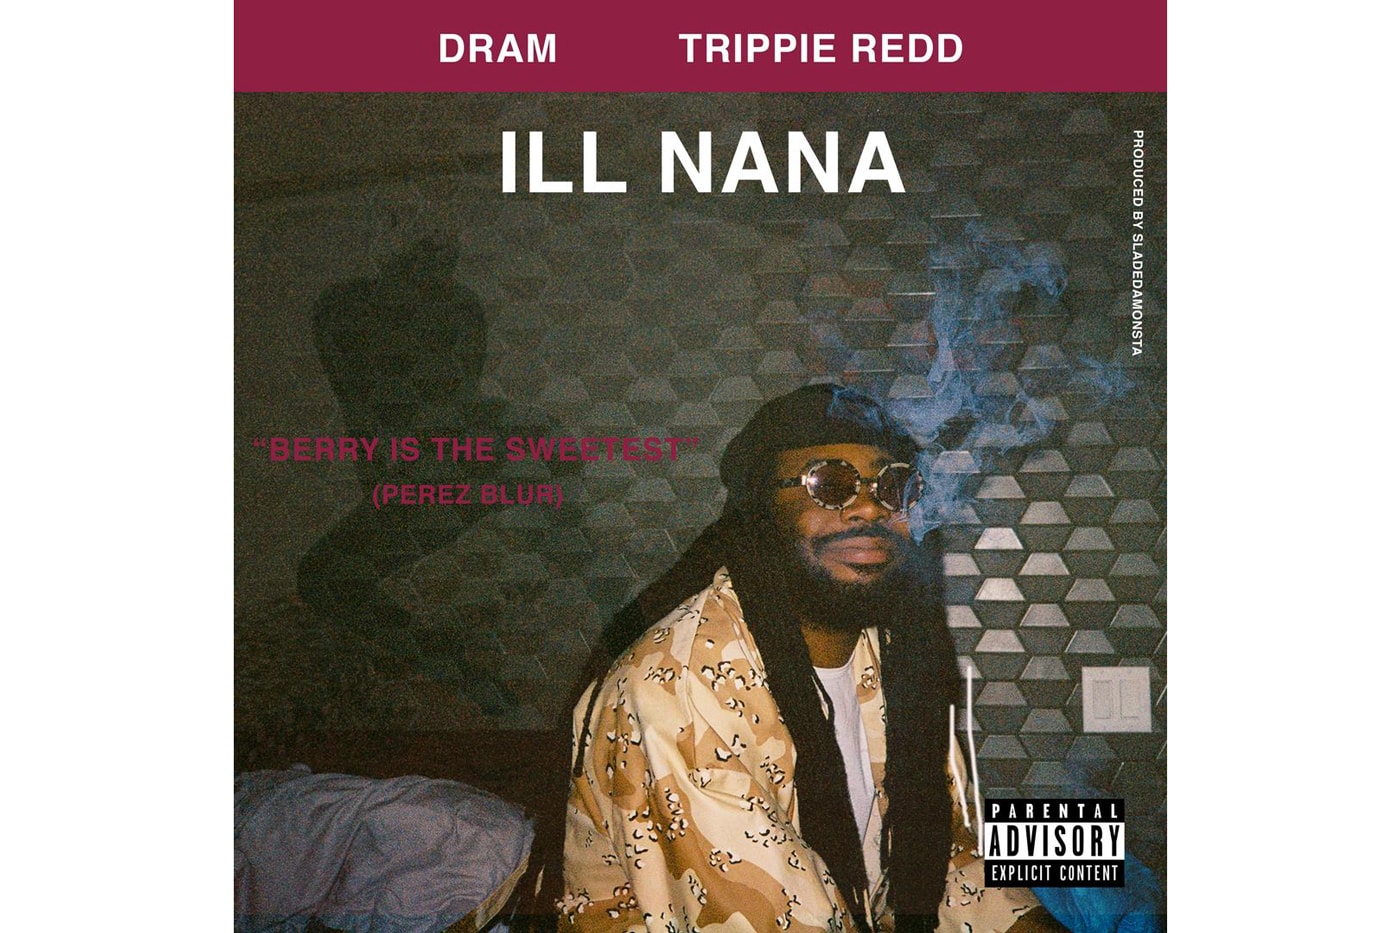 DRAM Trippie Redd "Ill Nana" A$AP Rocky ASAP Rocky